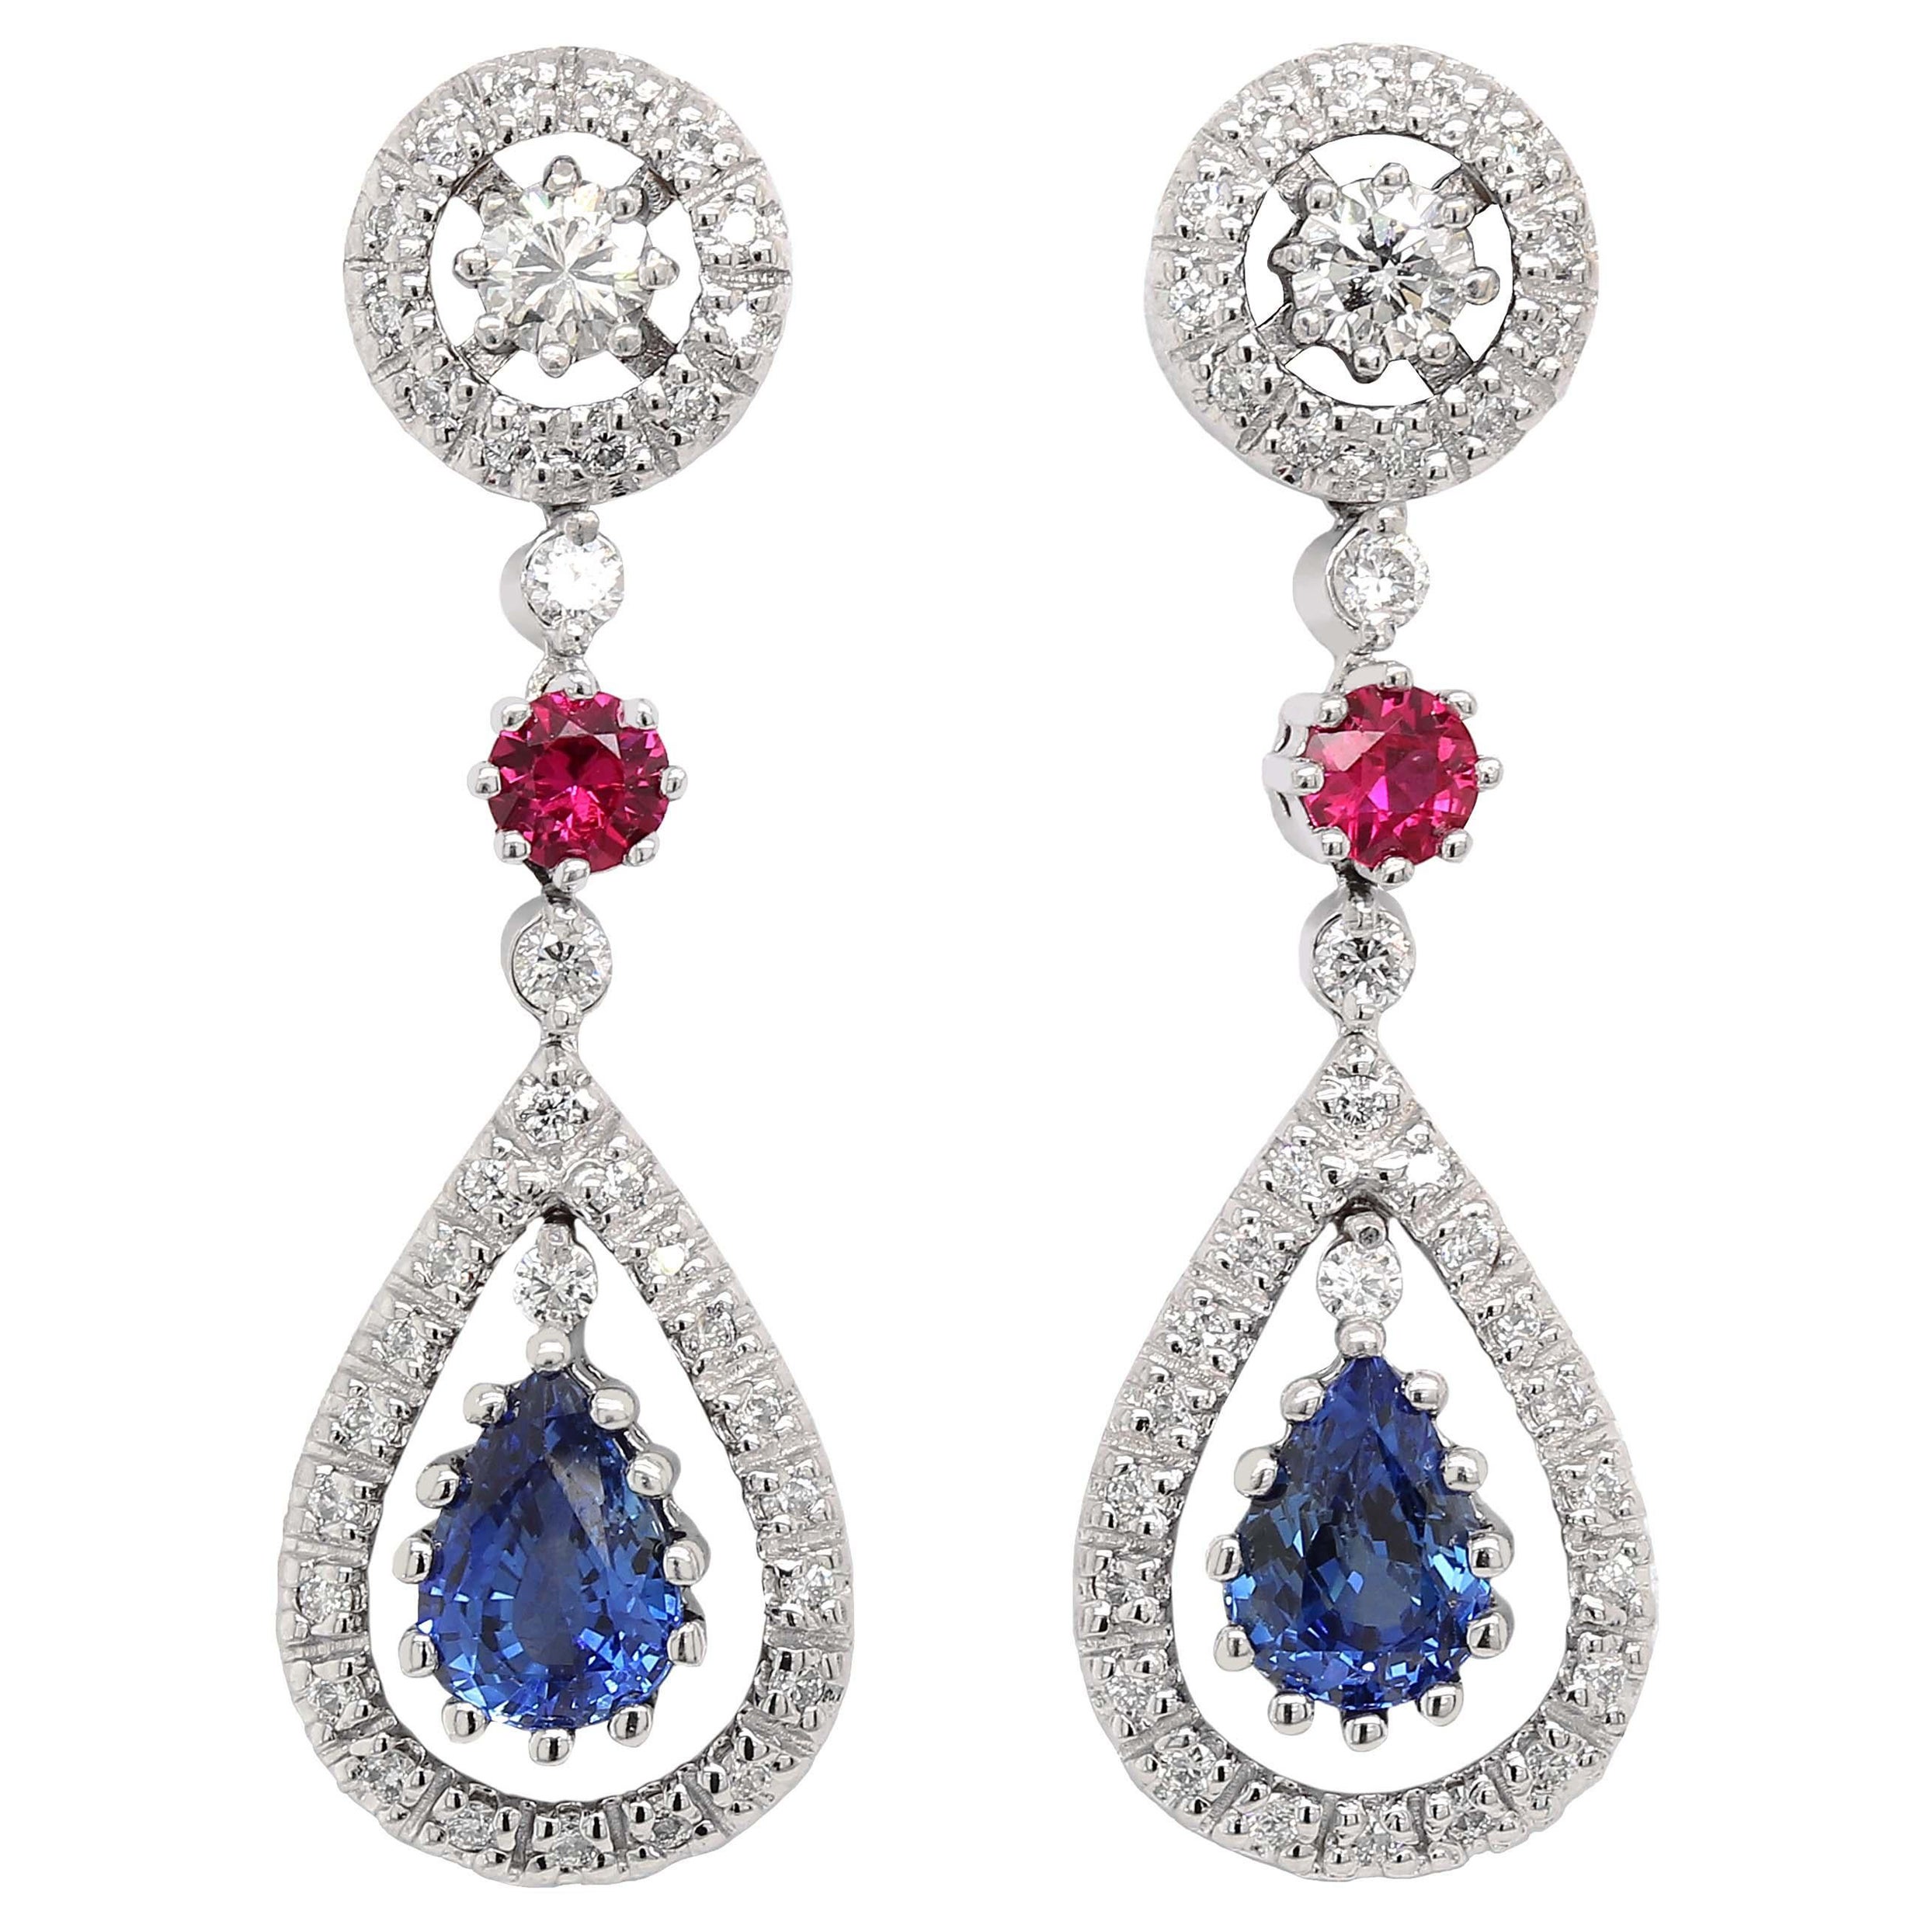 Blue Pear Shape Sapphires Earrings in 14k White Gold